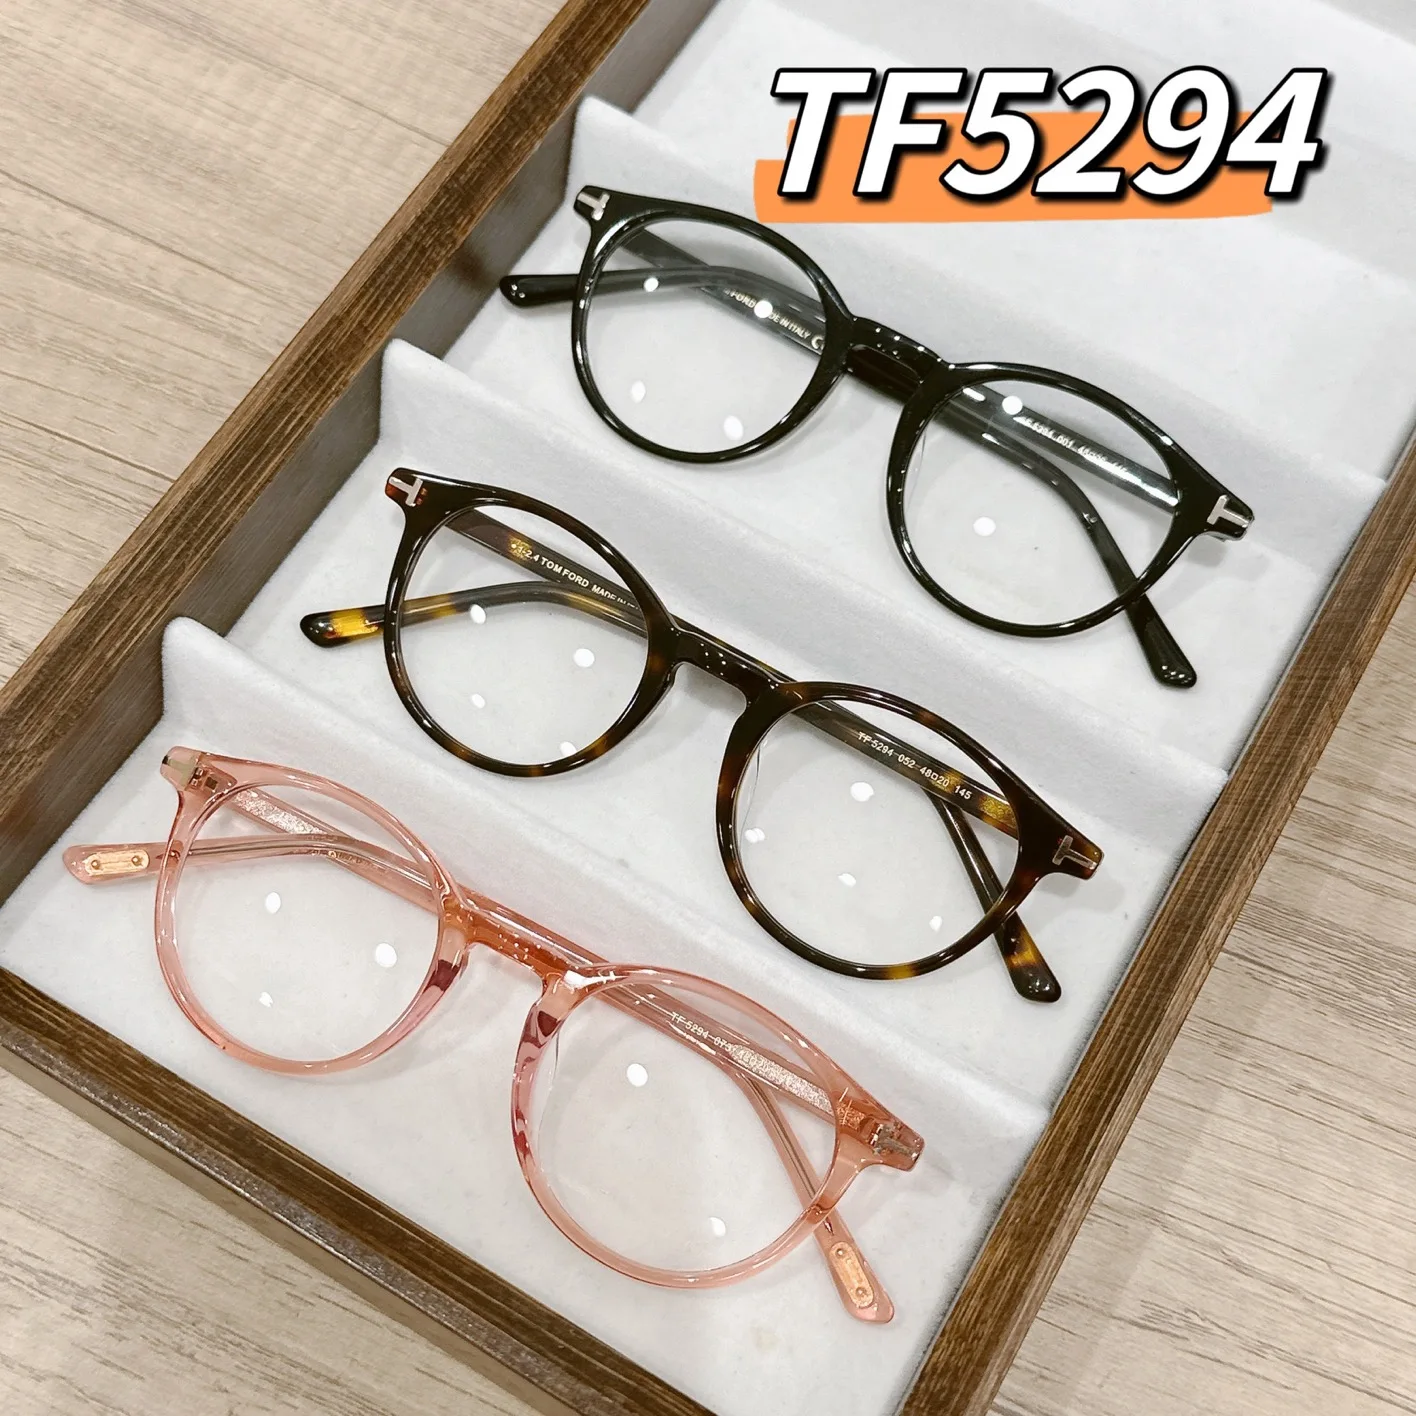 

Pink Tortoise Tf5294 Eyeglasses Nose pad Frames Size 48-20-145 Myopia Prescription Luxury Acetate Reading glasses for women